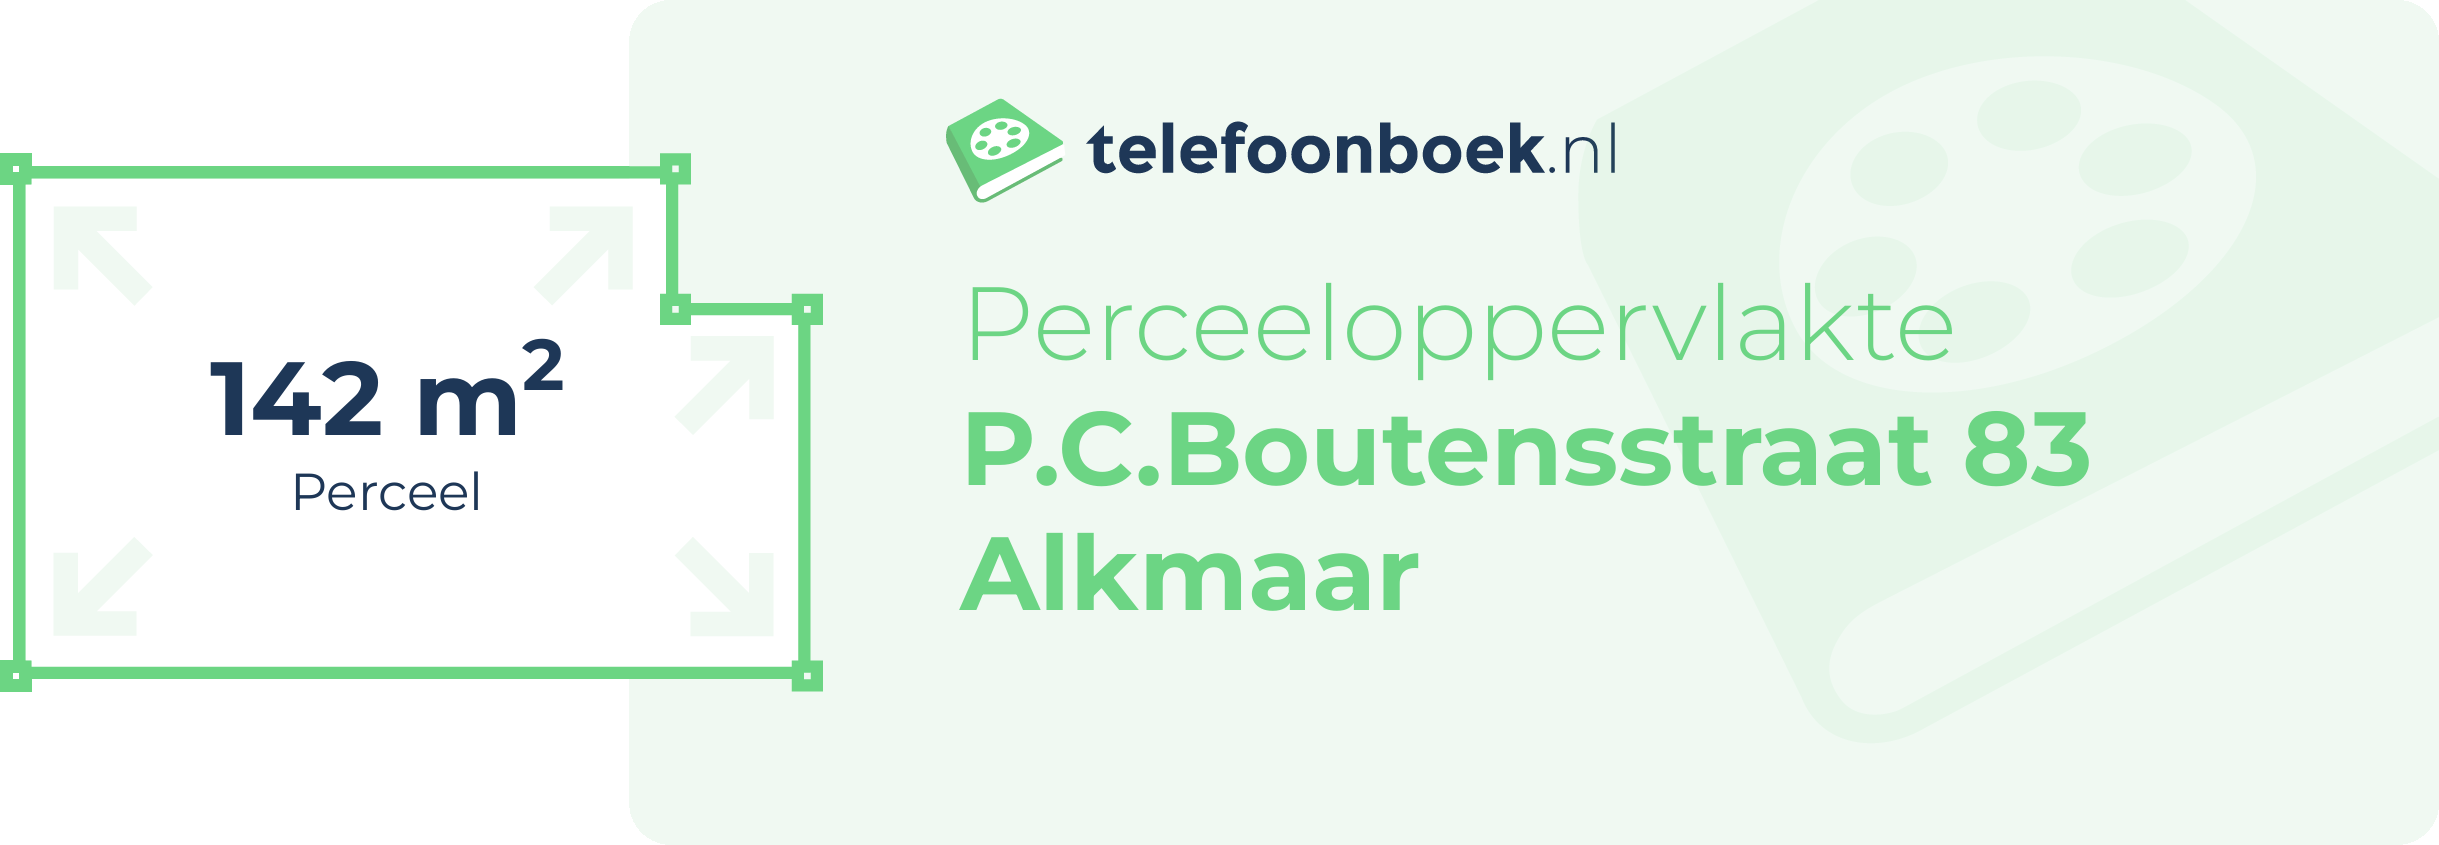 Perceeloppervlakte P.C.Boutensstraat 83 Alkmaar